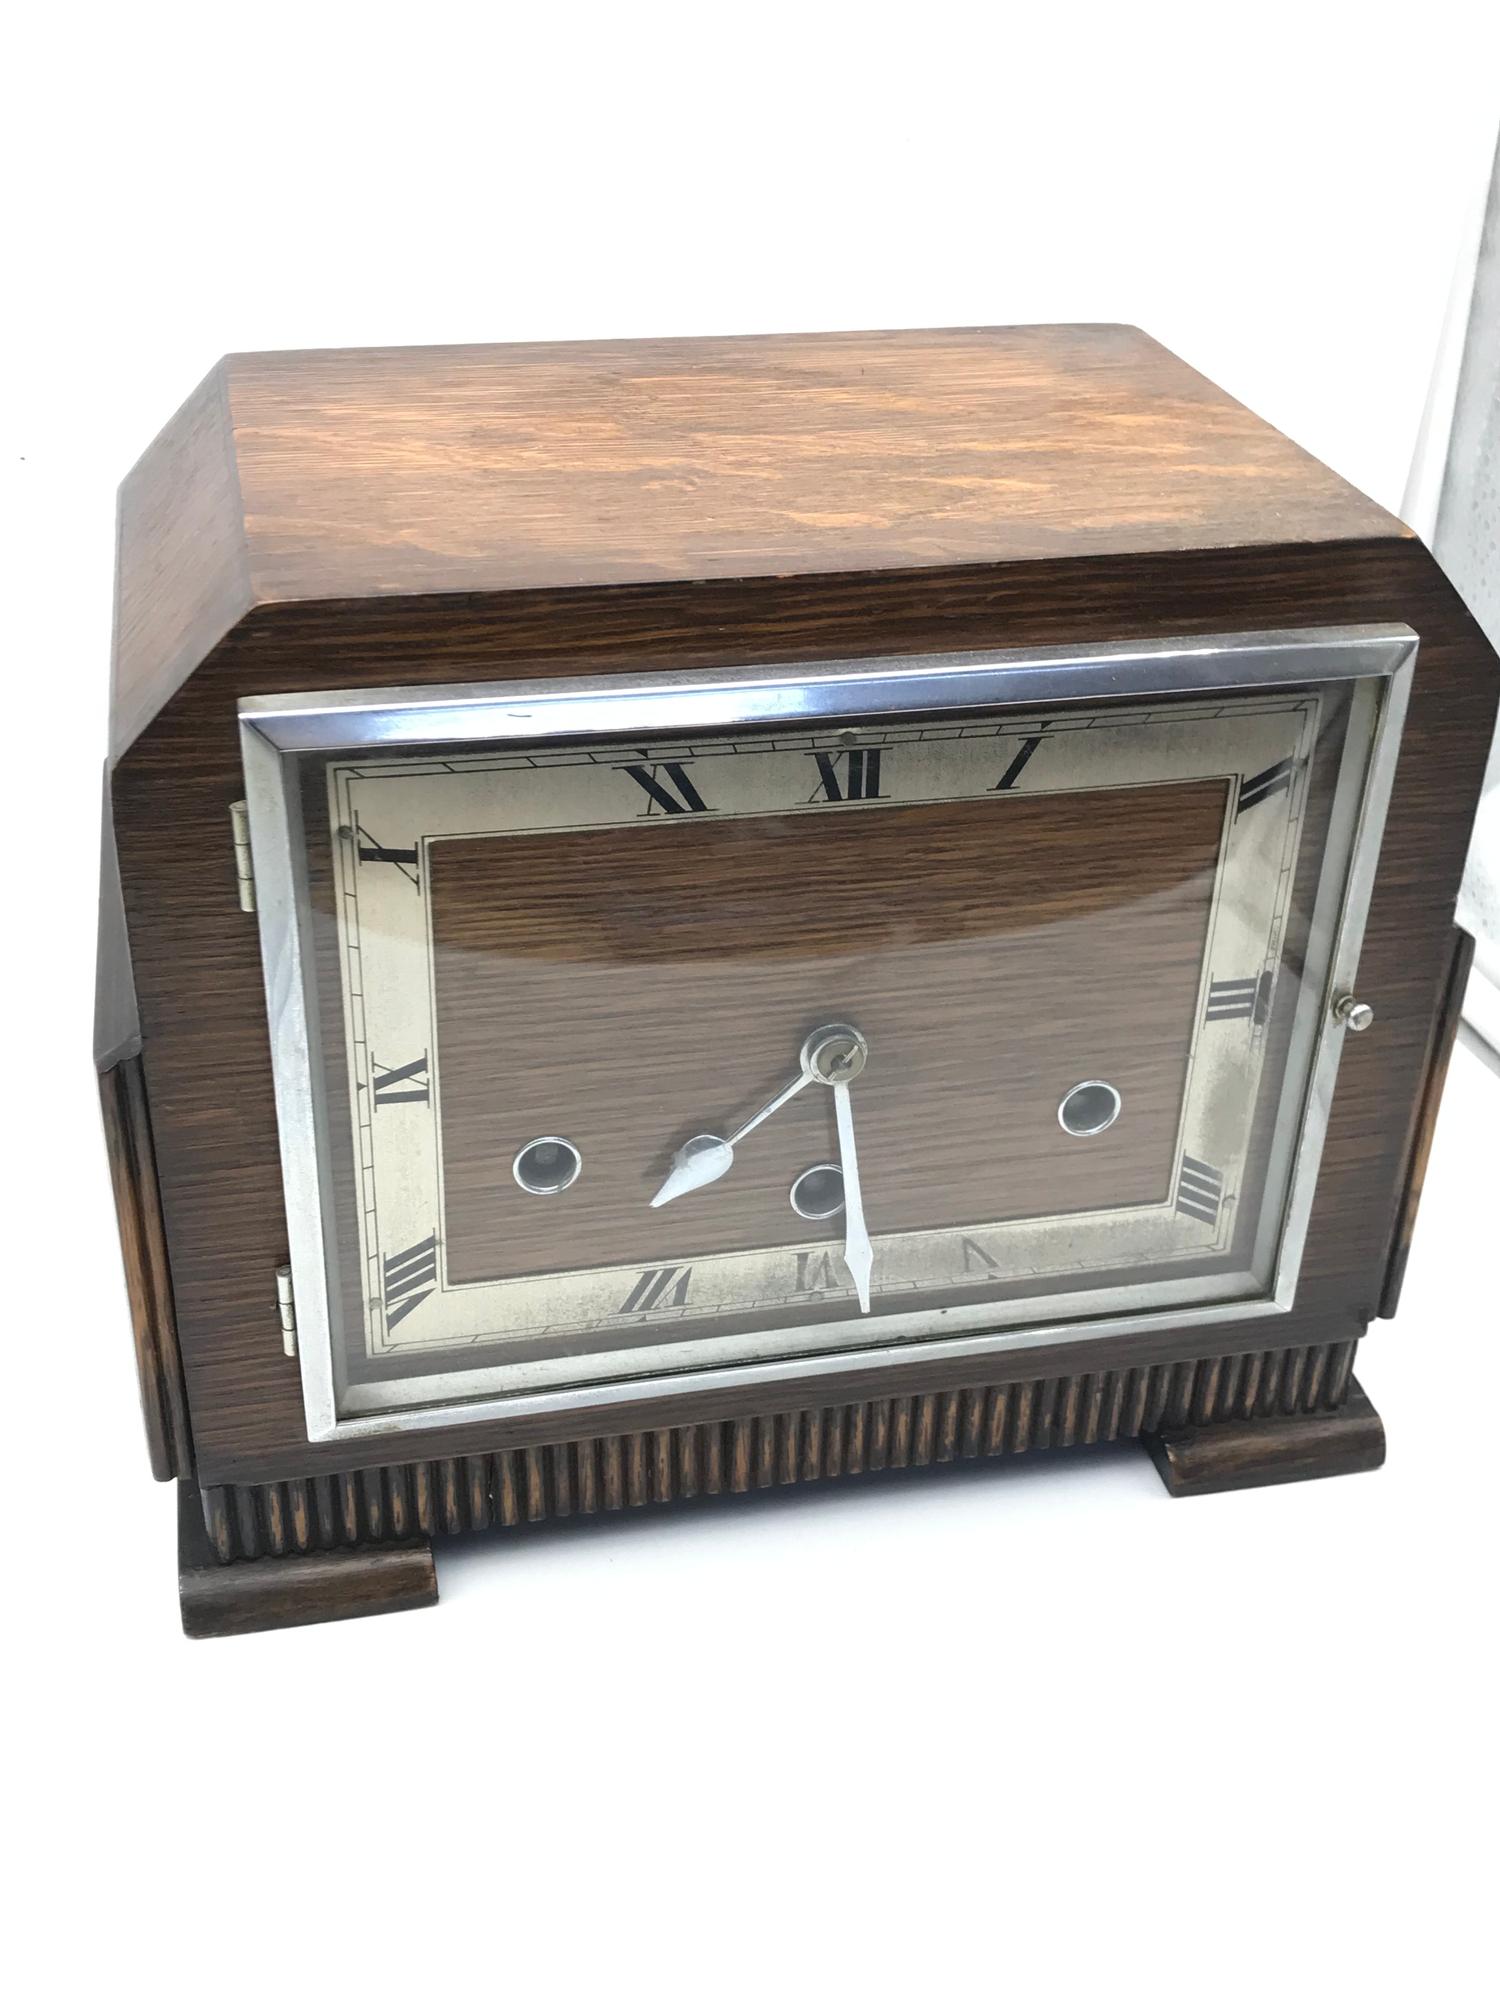 An Art Deco Norland mantel clock with key and pendulum. Running.